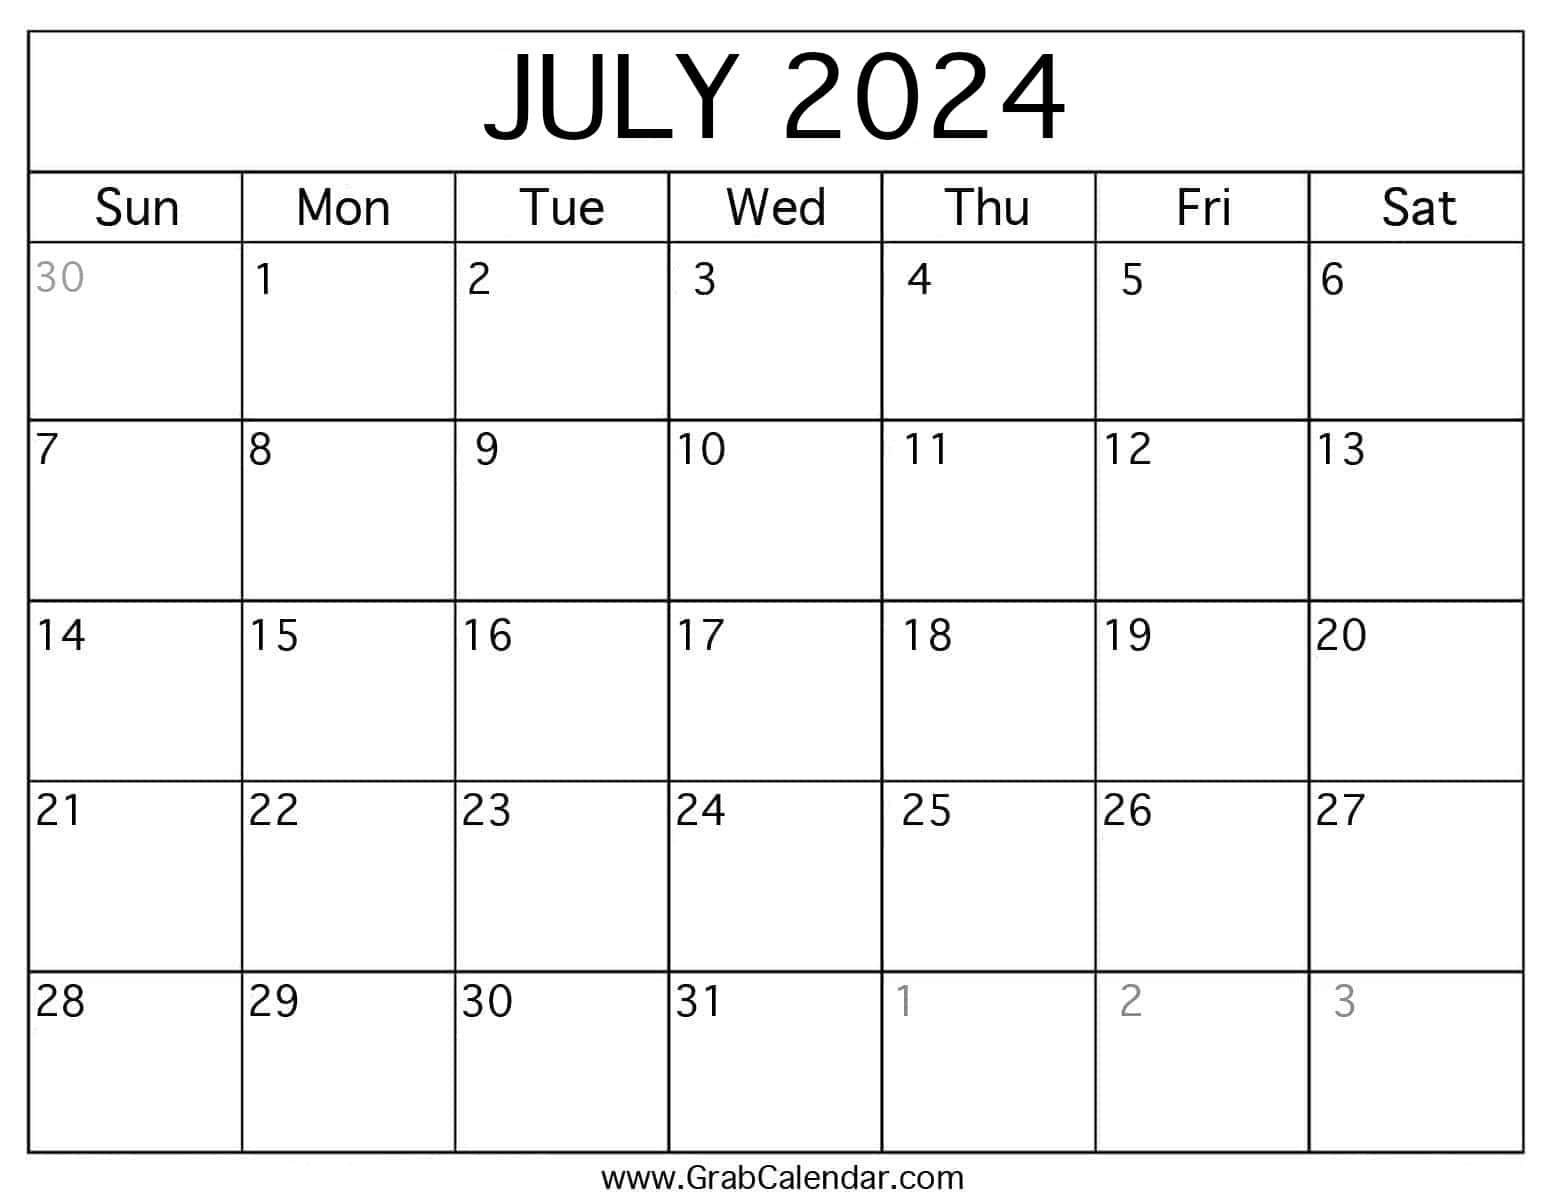 Printable July 2024 Calendar regarding 2024 Calendar July Month